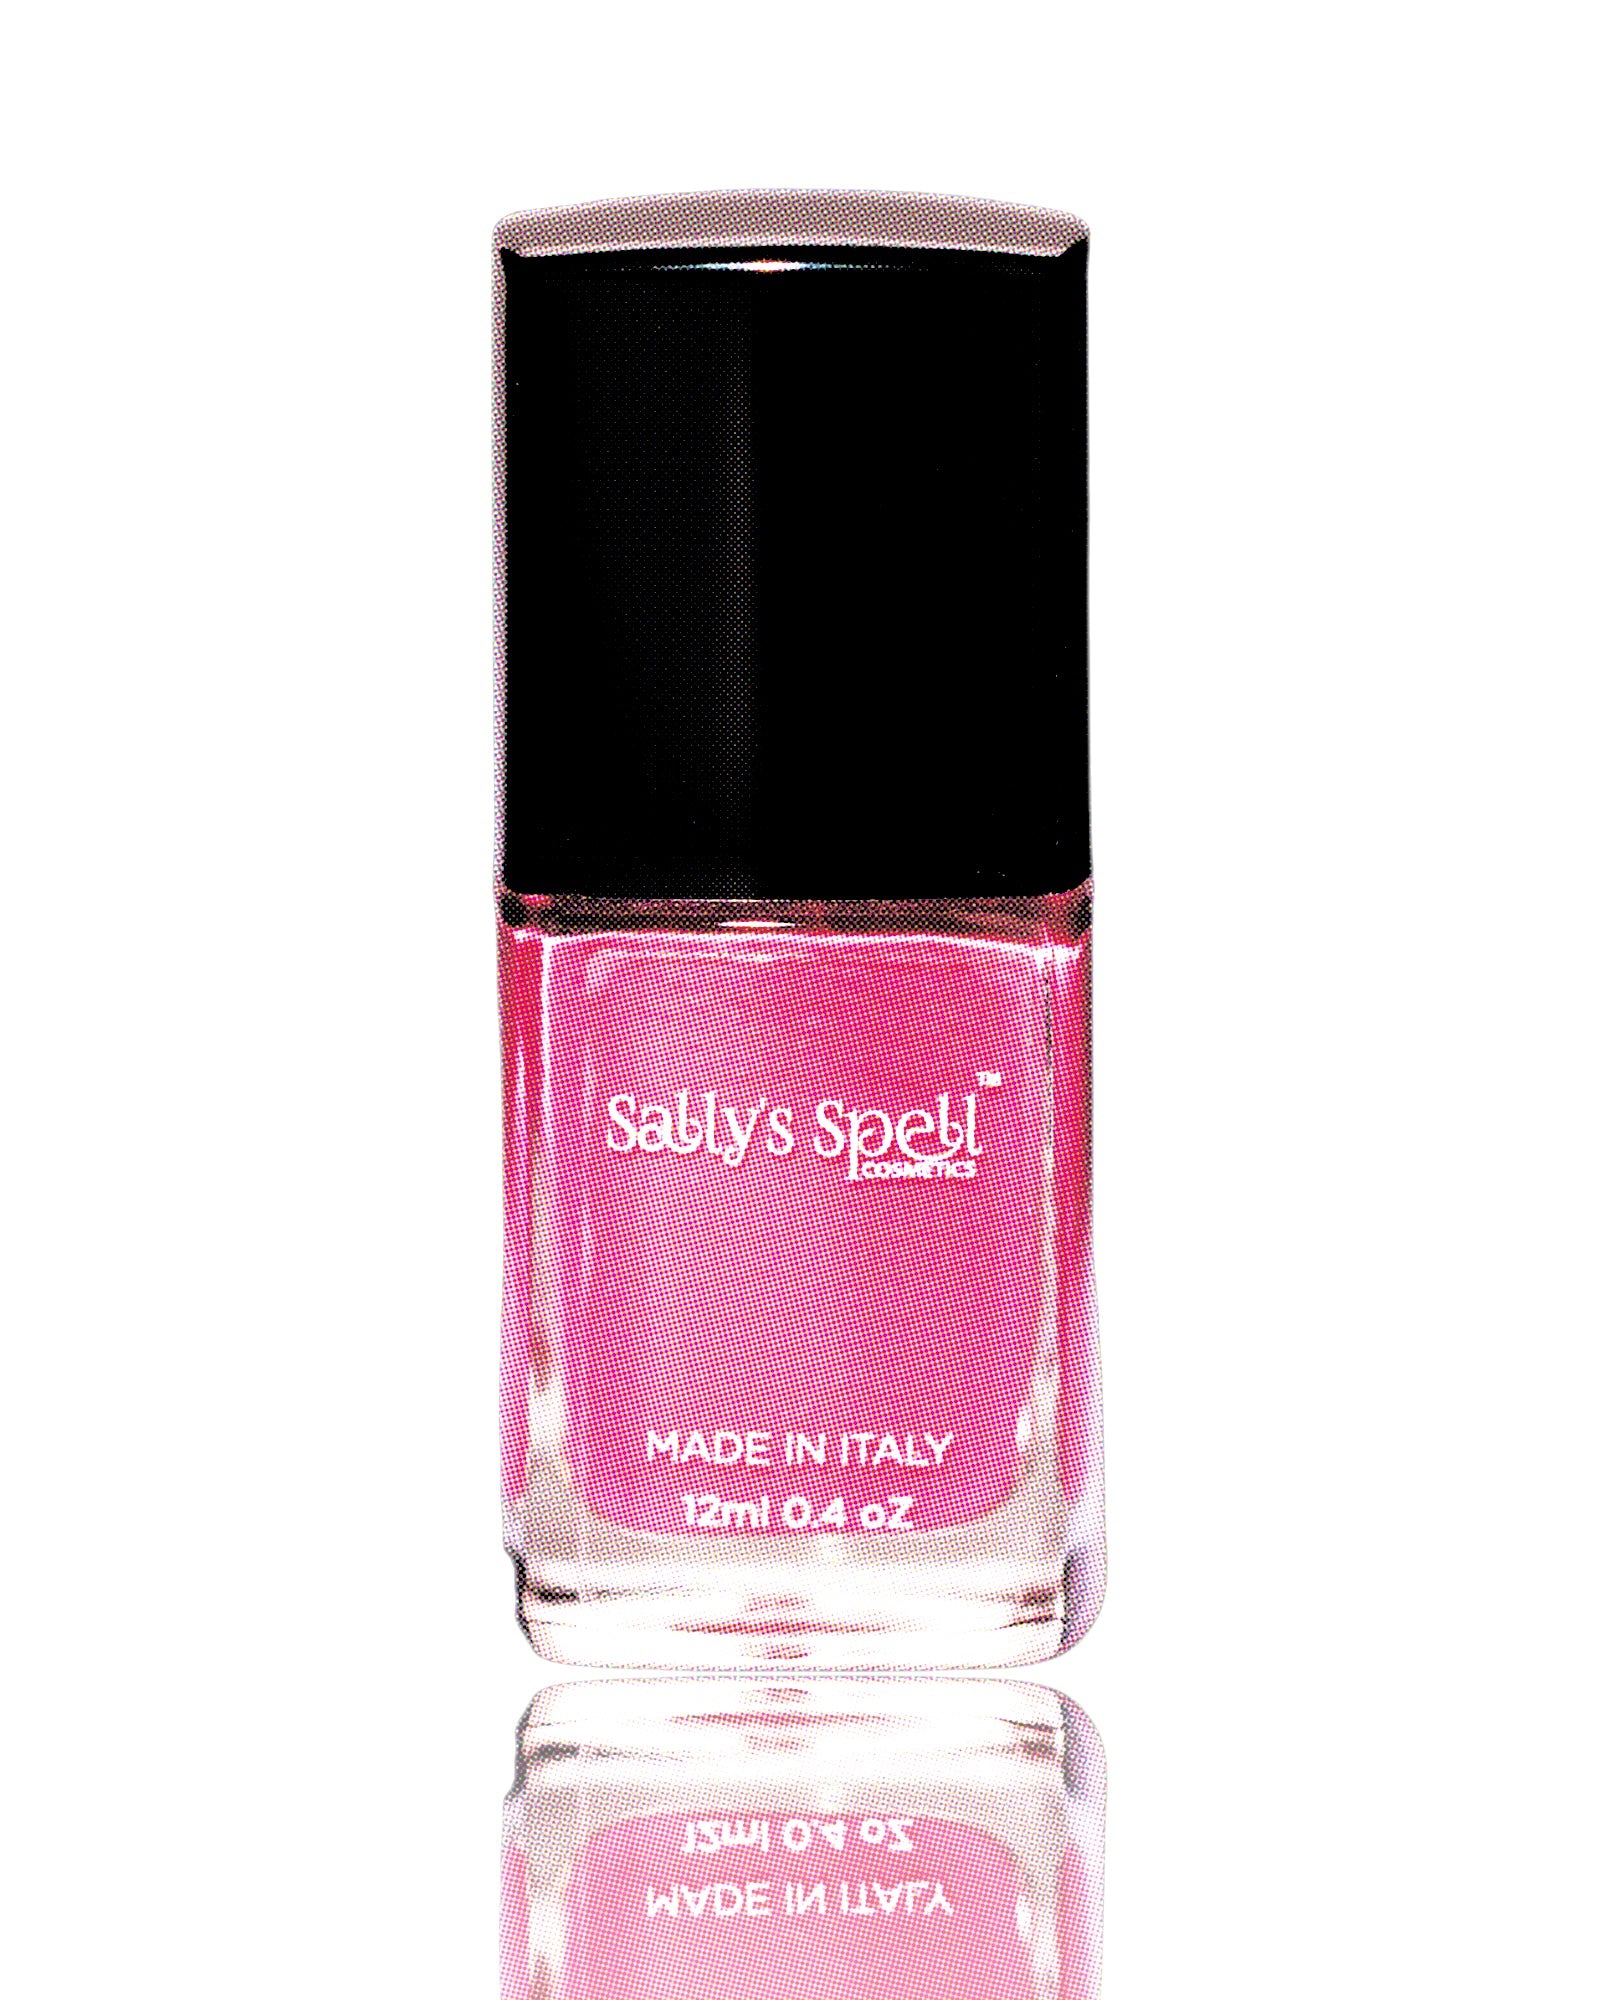 Sally's Spell nail polish - Hey Barbie